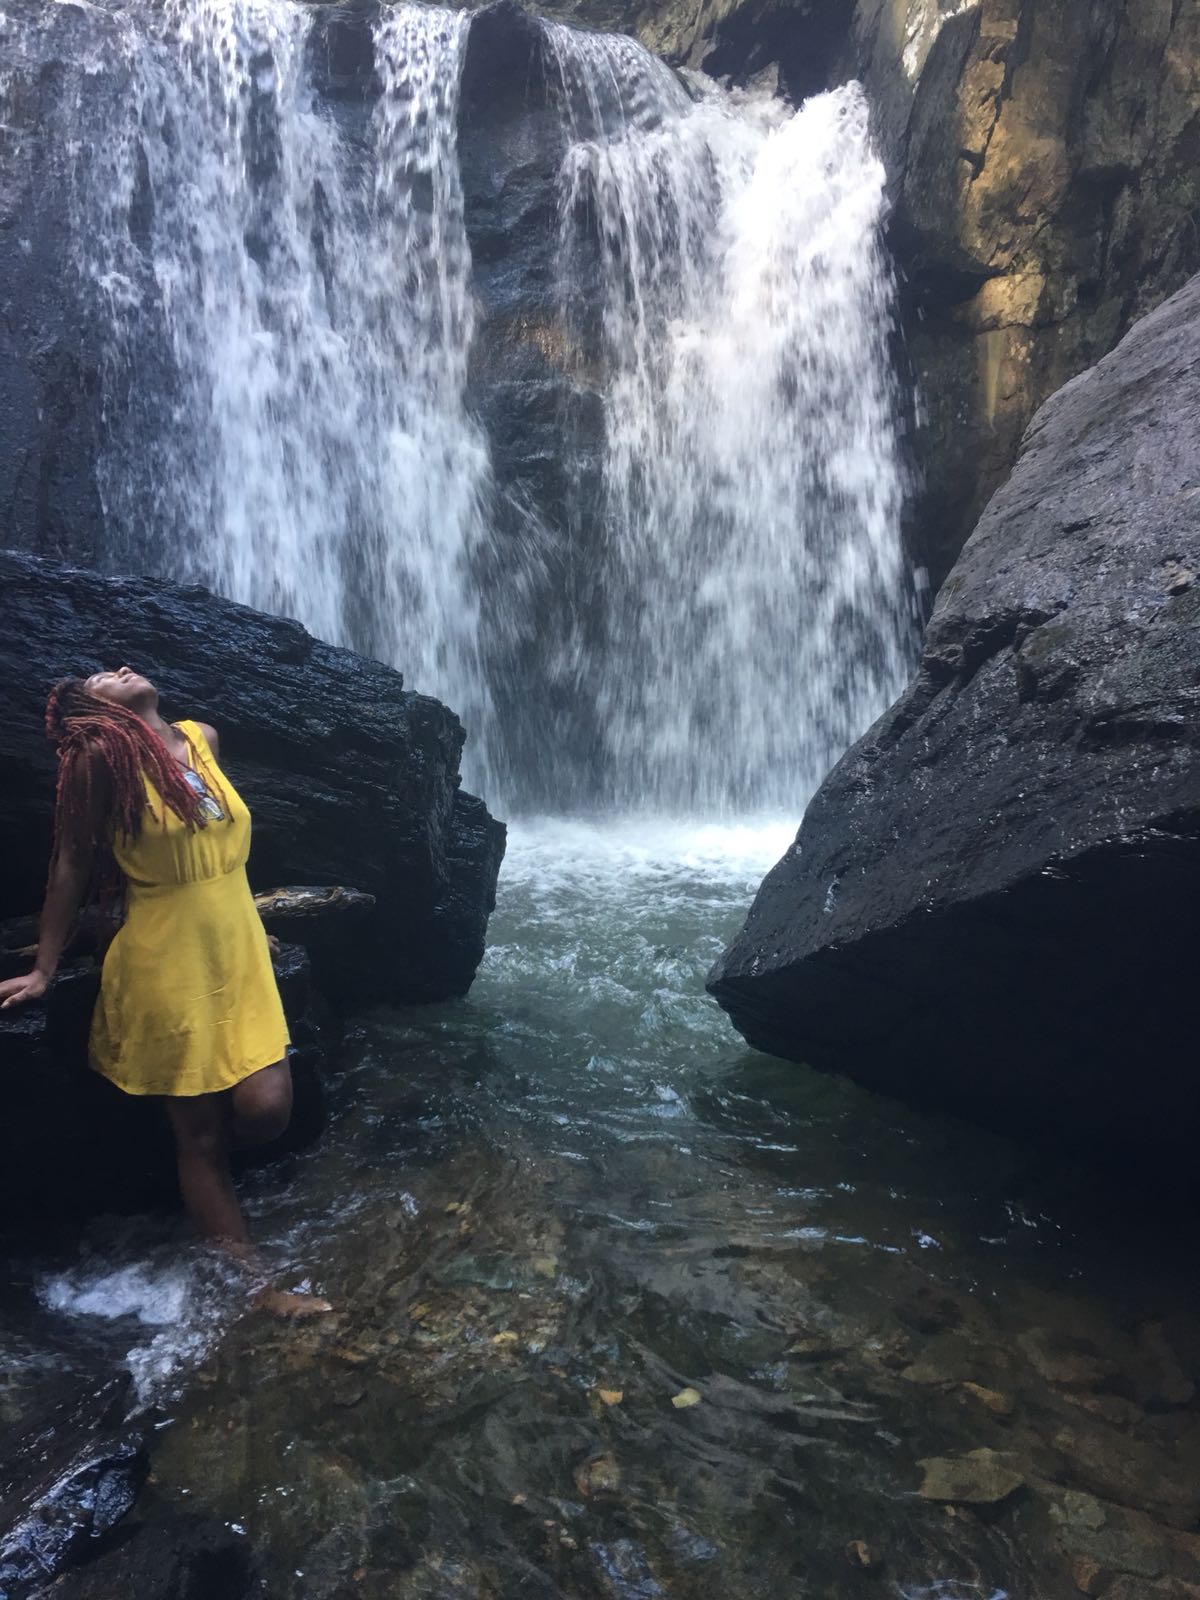 My Favorite waterfall ~ Kilgore Falls